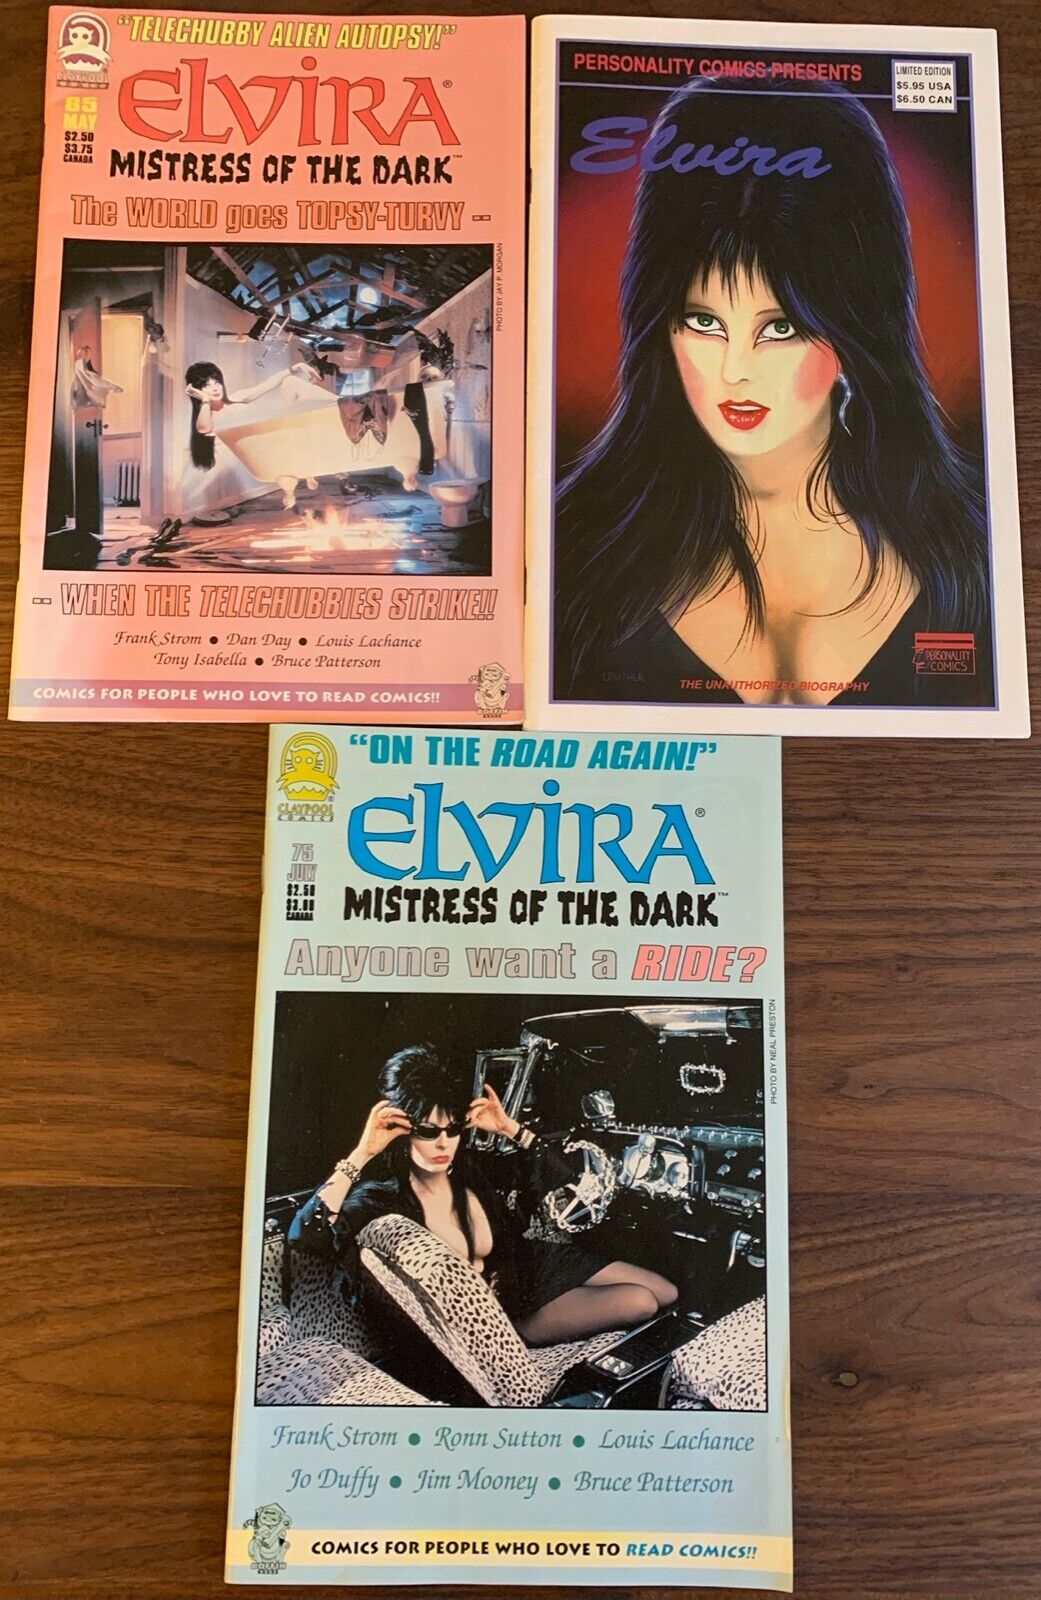 Elvira Mistress of the Dark #75 #85 Claypool Comics 1997 & Personality Comics